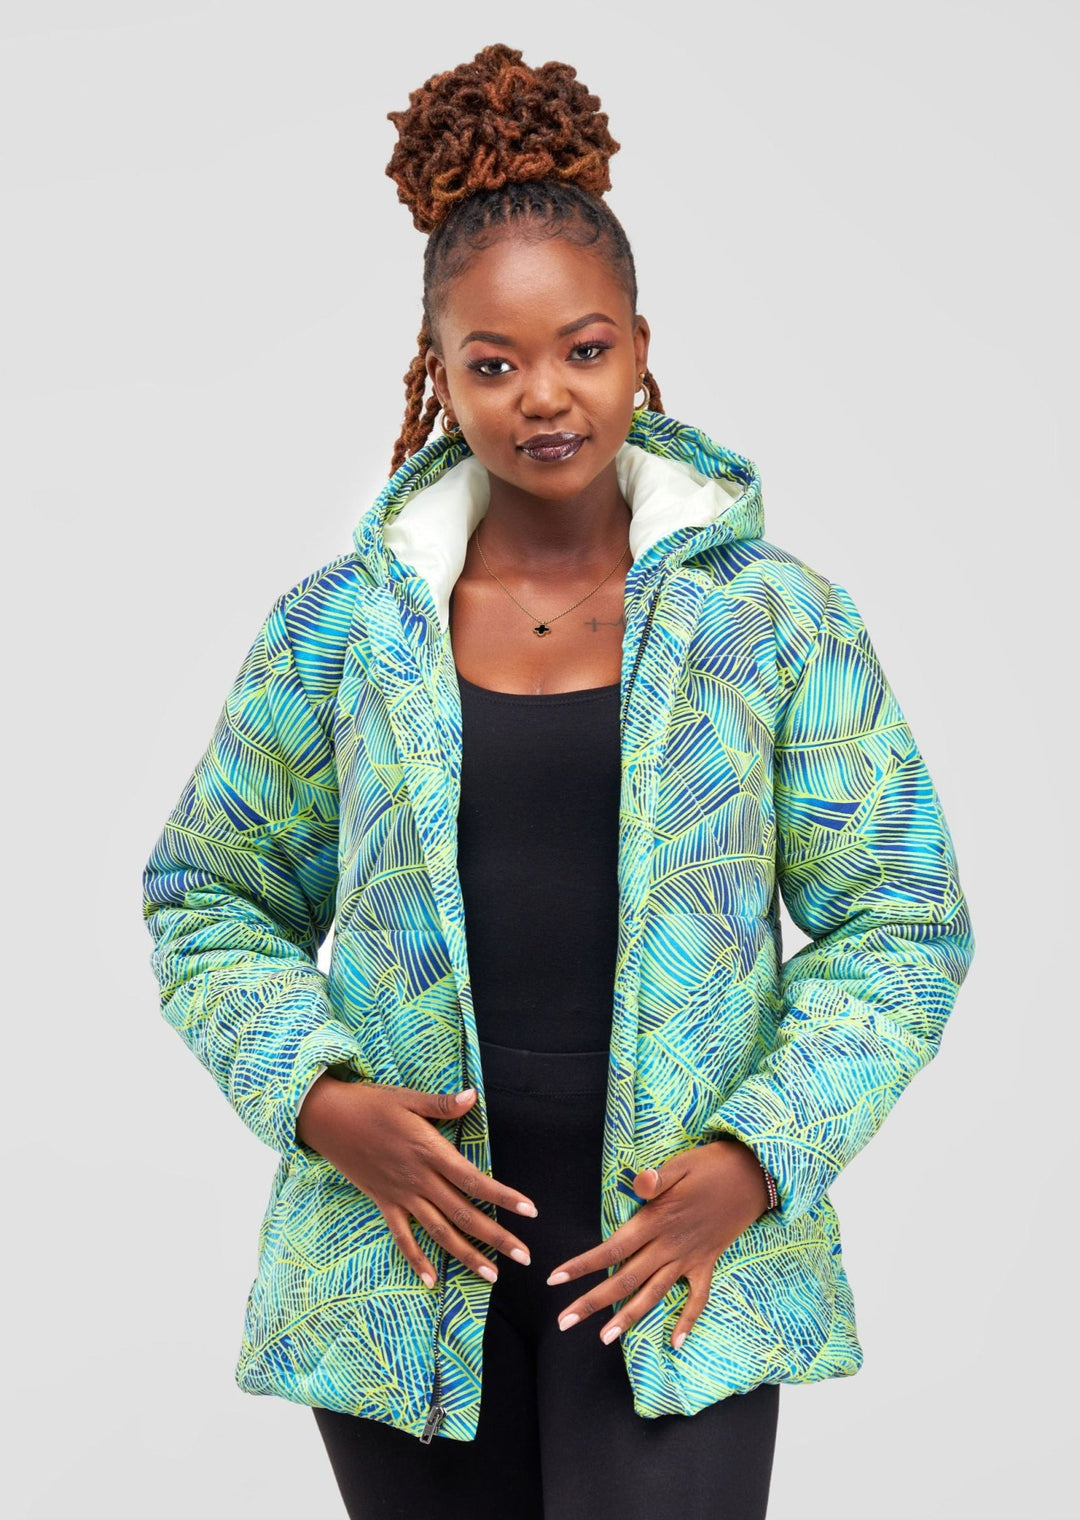 Kuschelige Winterjacke ‚Splash Splash‘ - mikono.africa Jacken aus Kenia bunte Bomberjacke Partyjacke faire sozial nachhaltig designed in Kenia